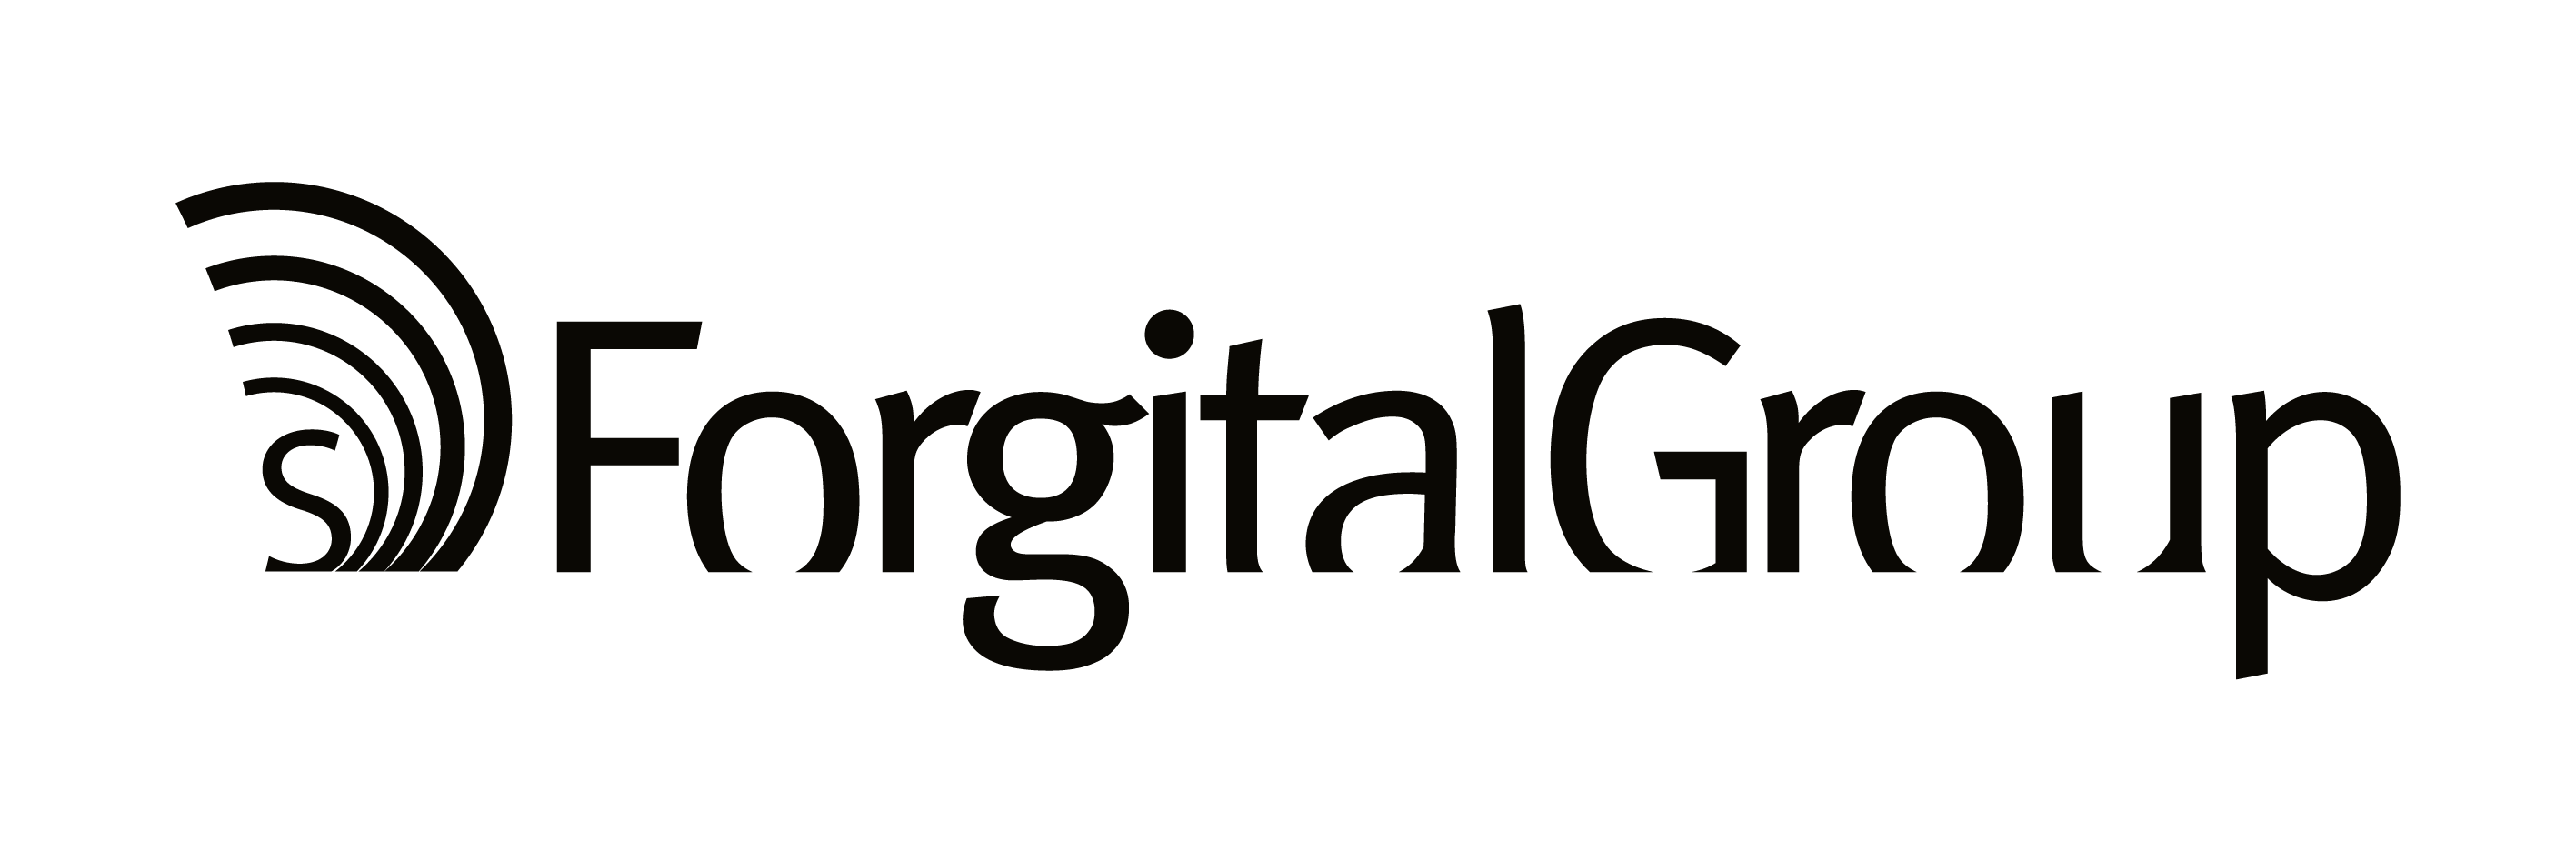 Forgital Group